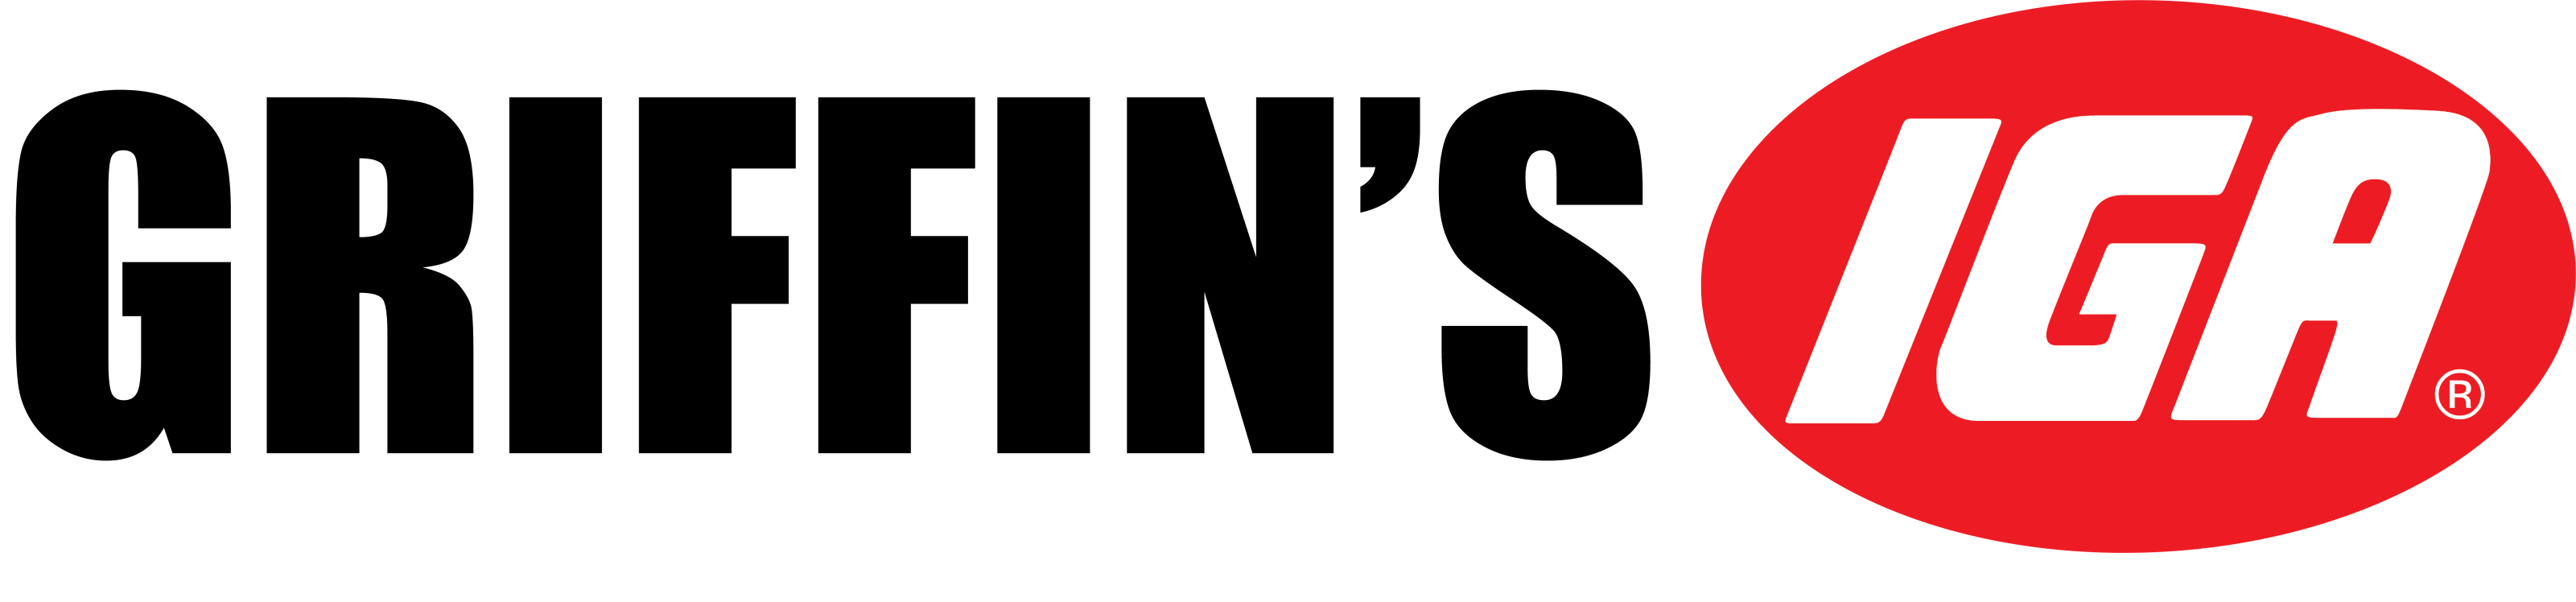 A theme logo of Griffin's IGA